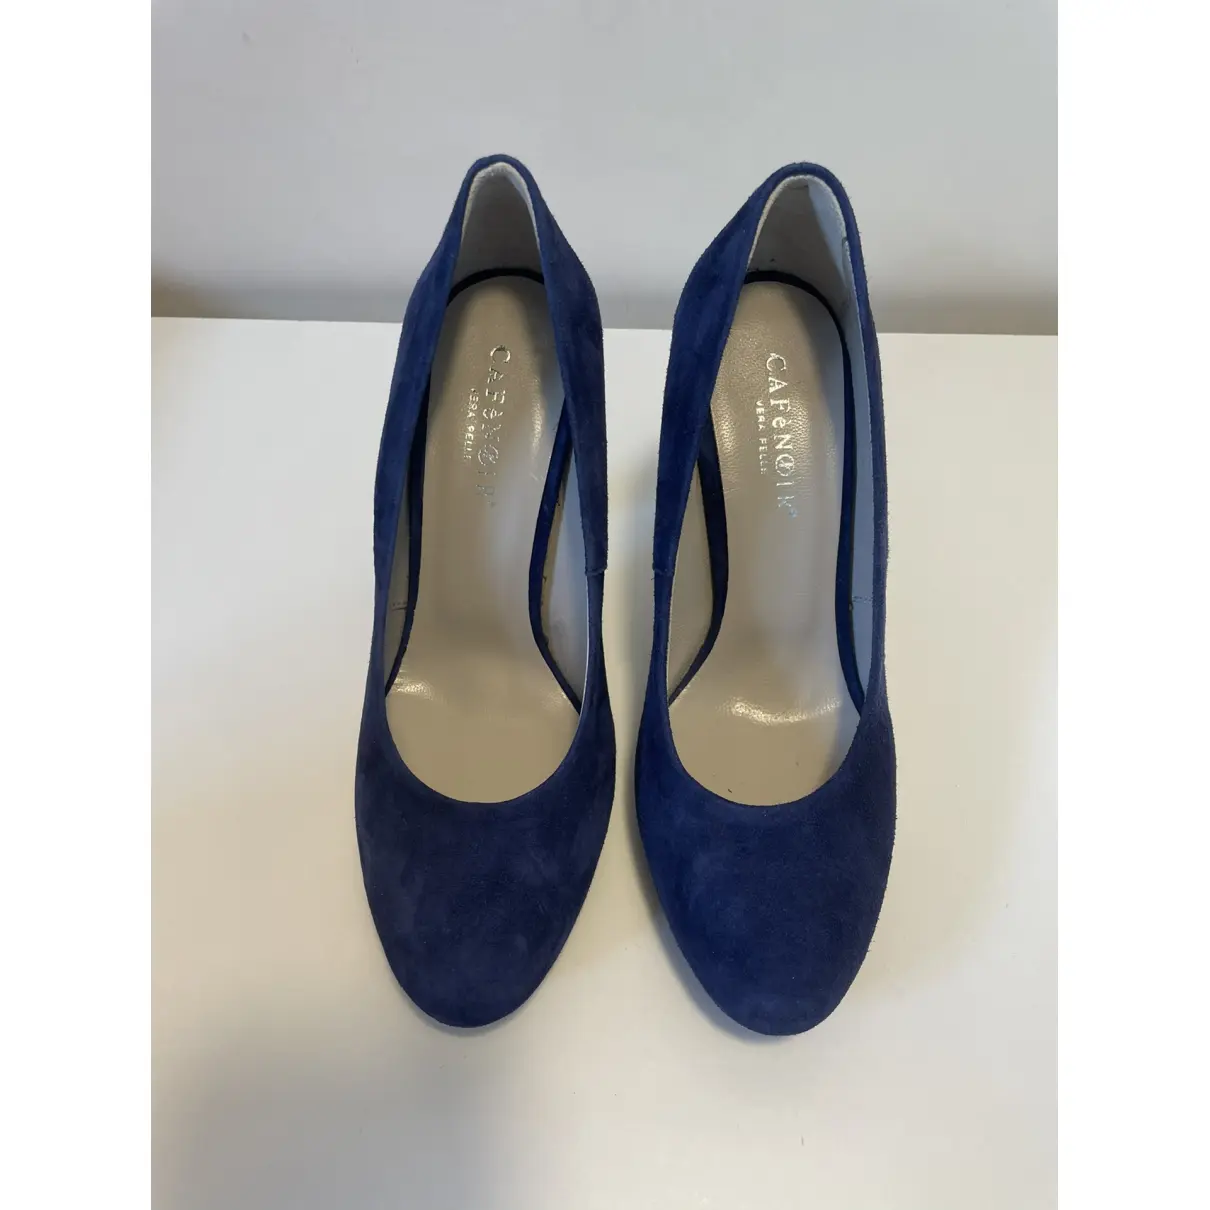 Buy CafèNoir Leather heels online